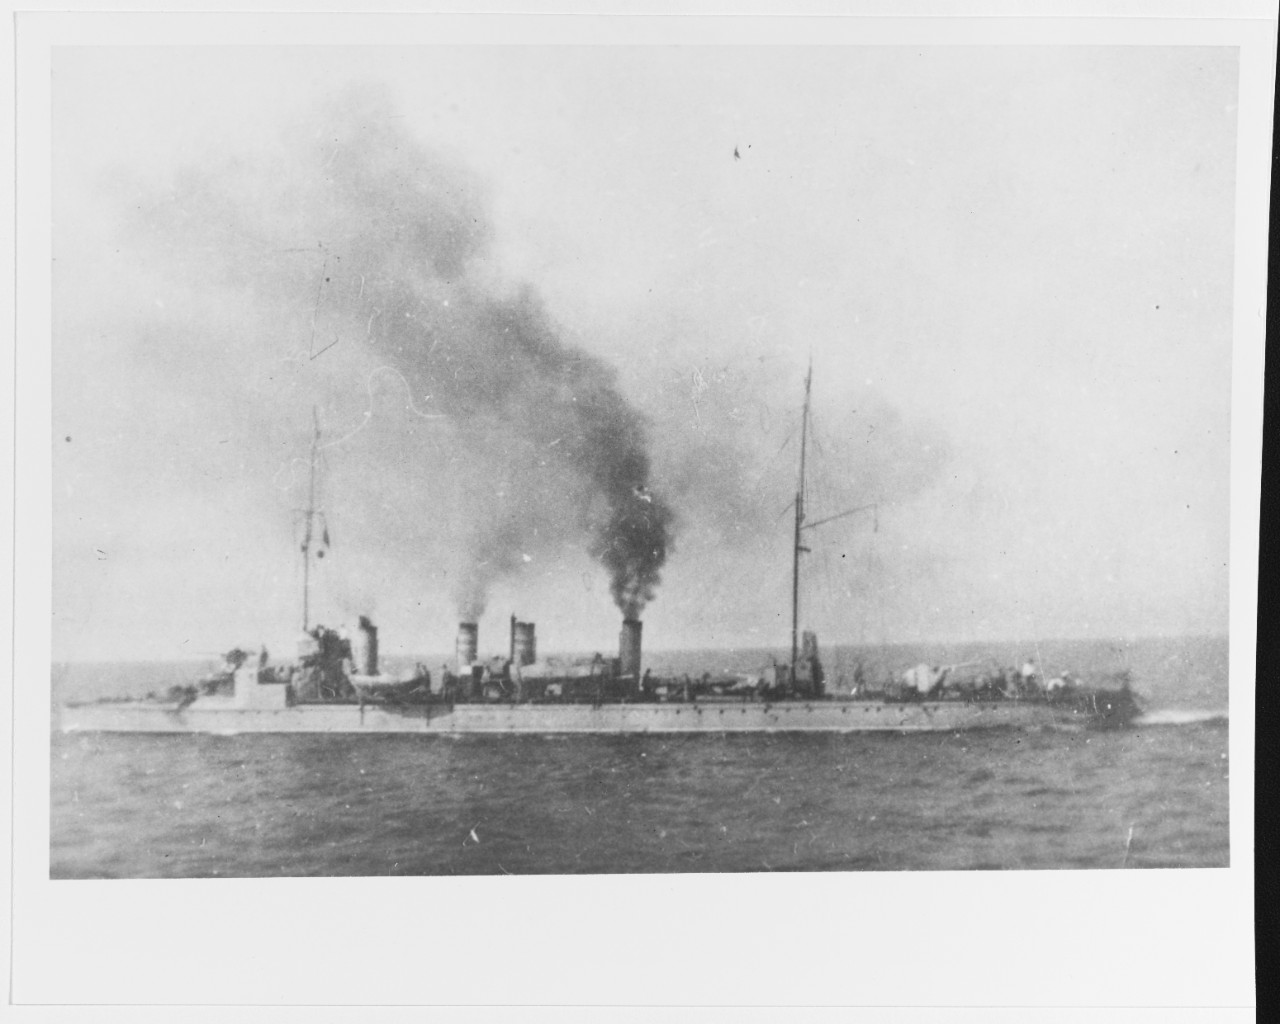 REZVYY (Russian destroyer, 1899-1922)